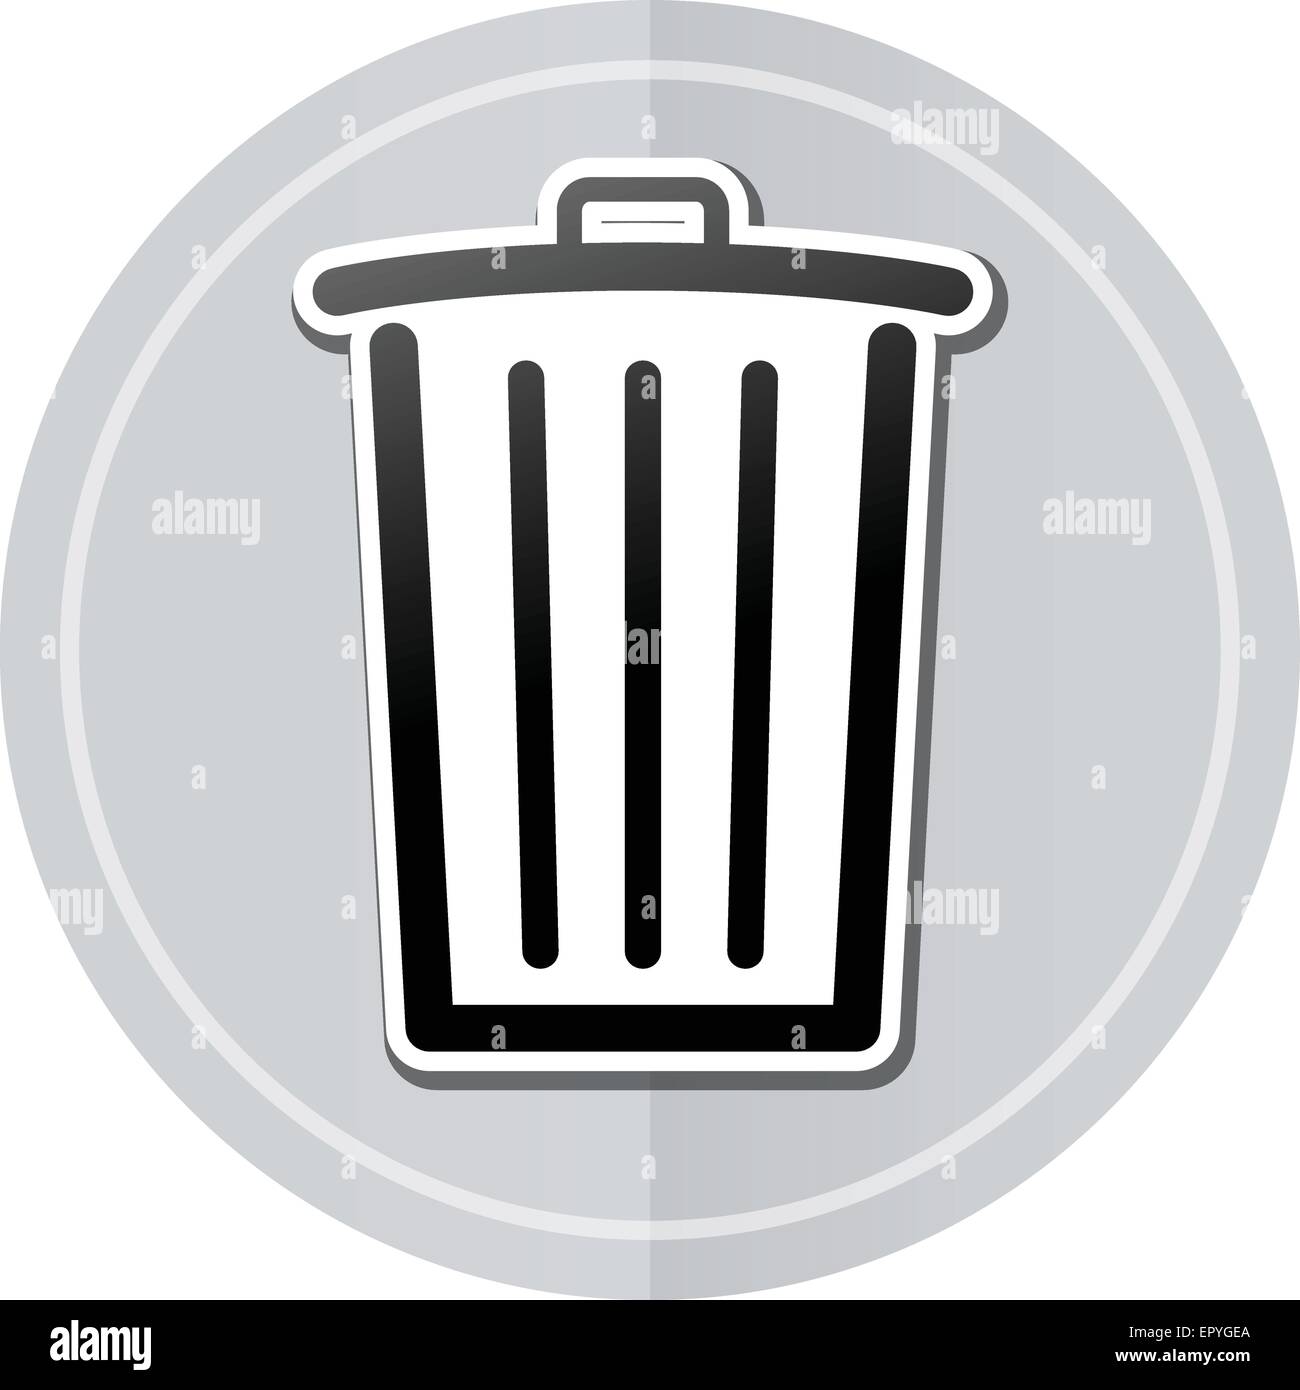 https://c8.alamy.com/comp/EPYGEA/illustration-of-delete-sticker-icon-simple-design-EPYGEA.jpg